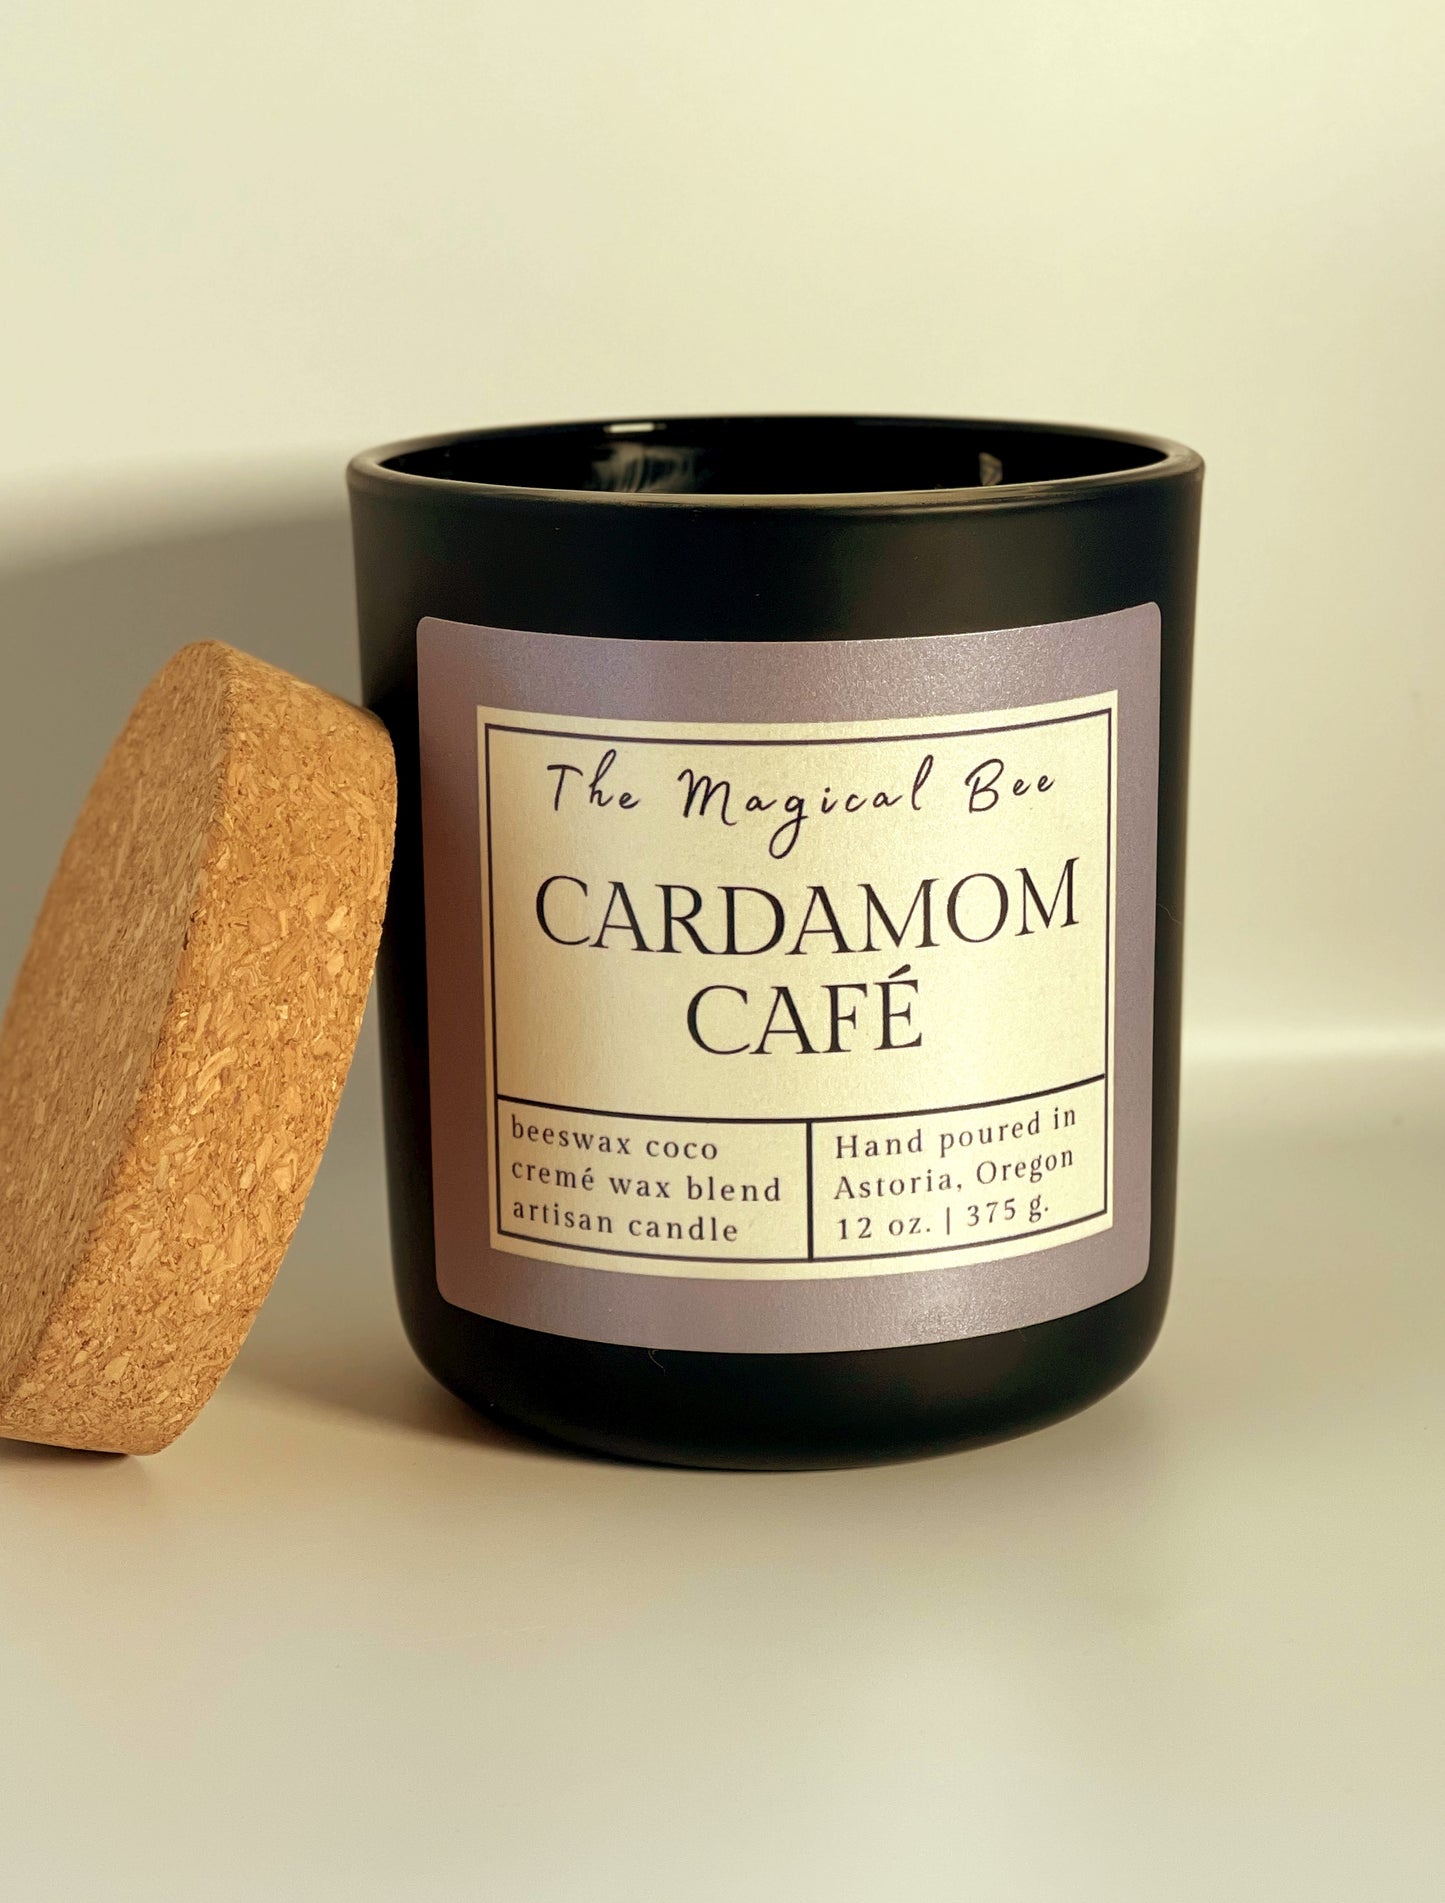 Cardamom Café candle